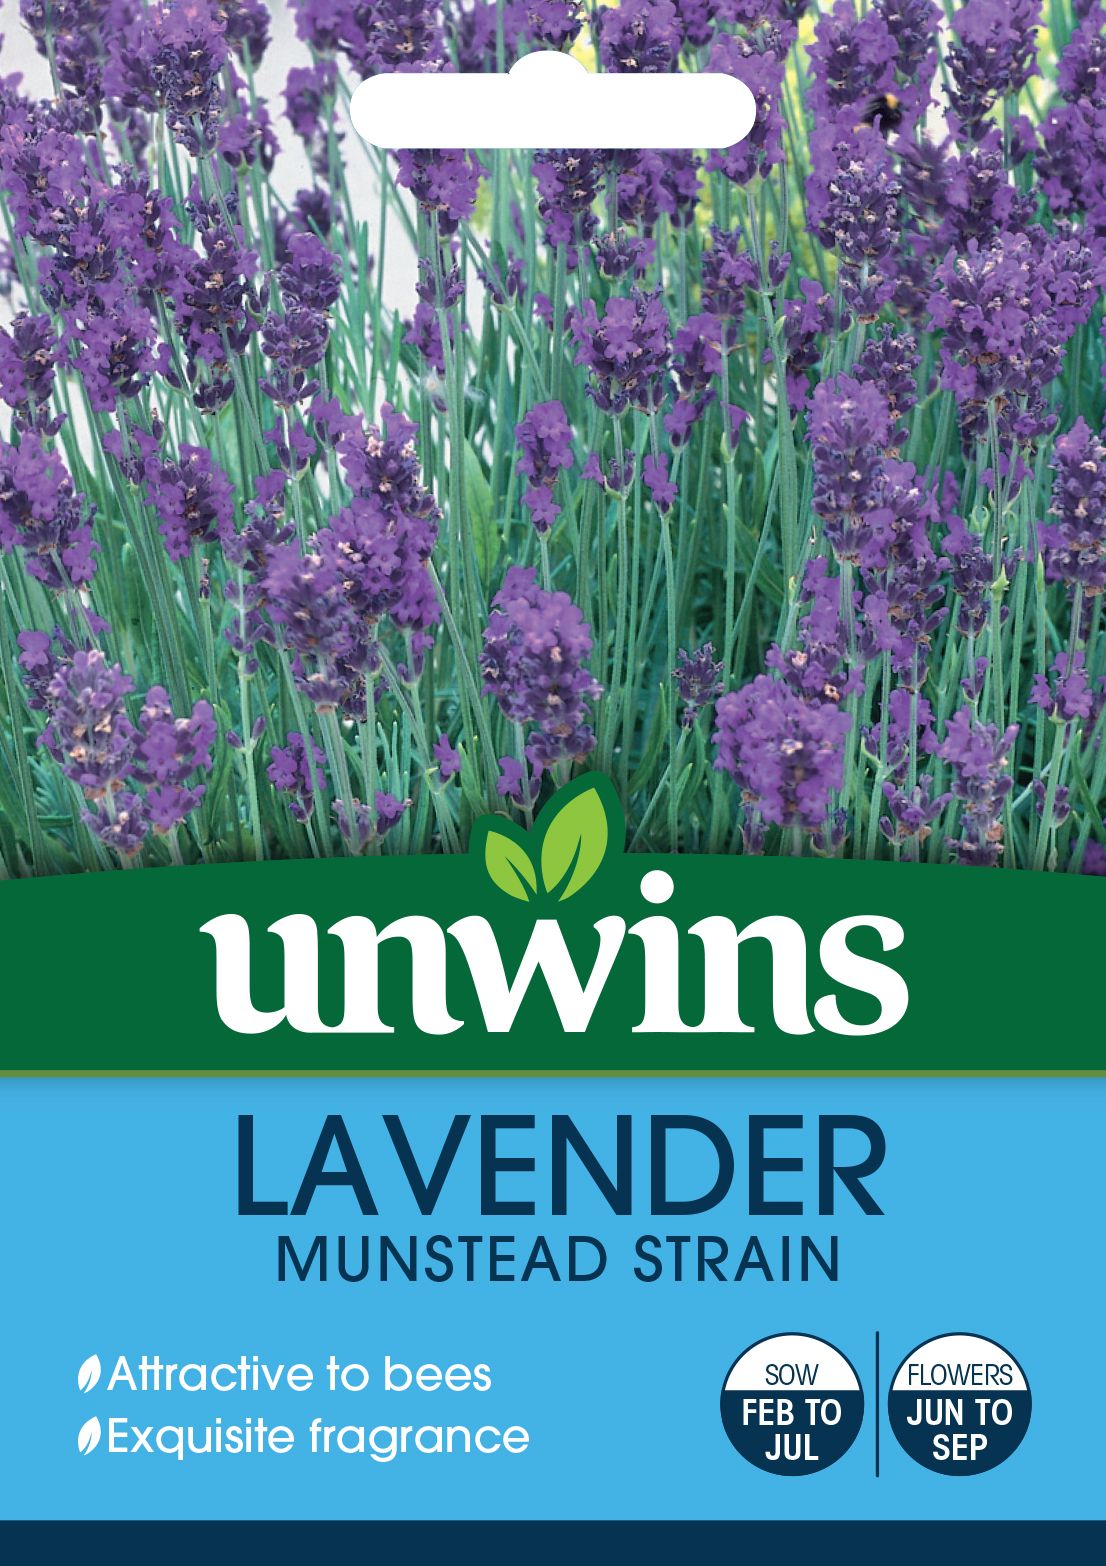 Lavender Munstead Strain